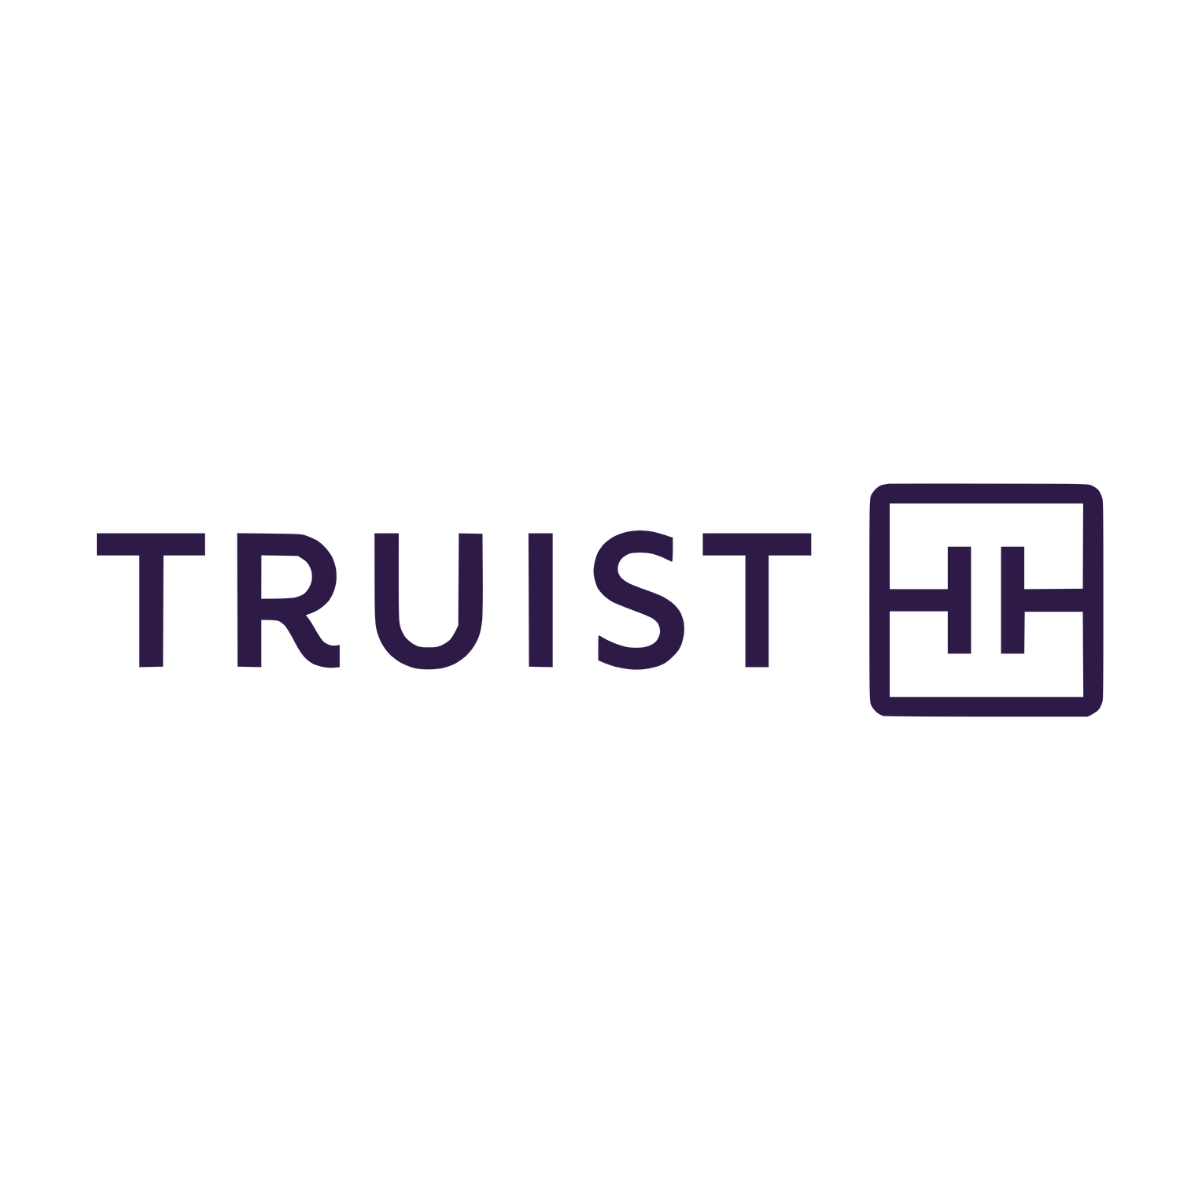 Truist logo copy.png